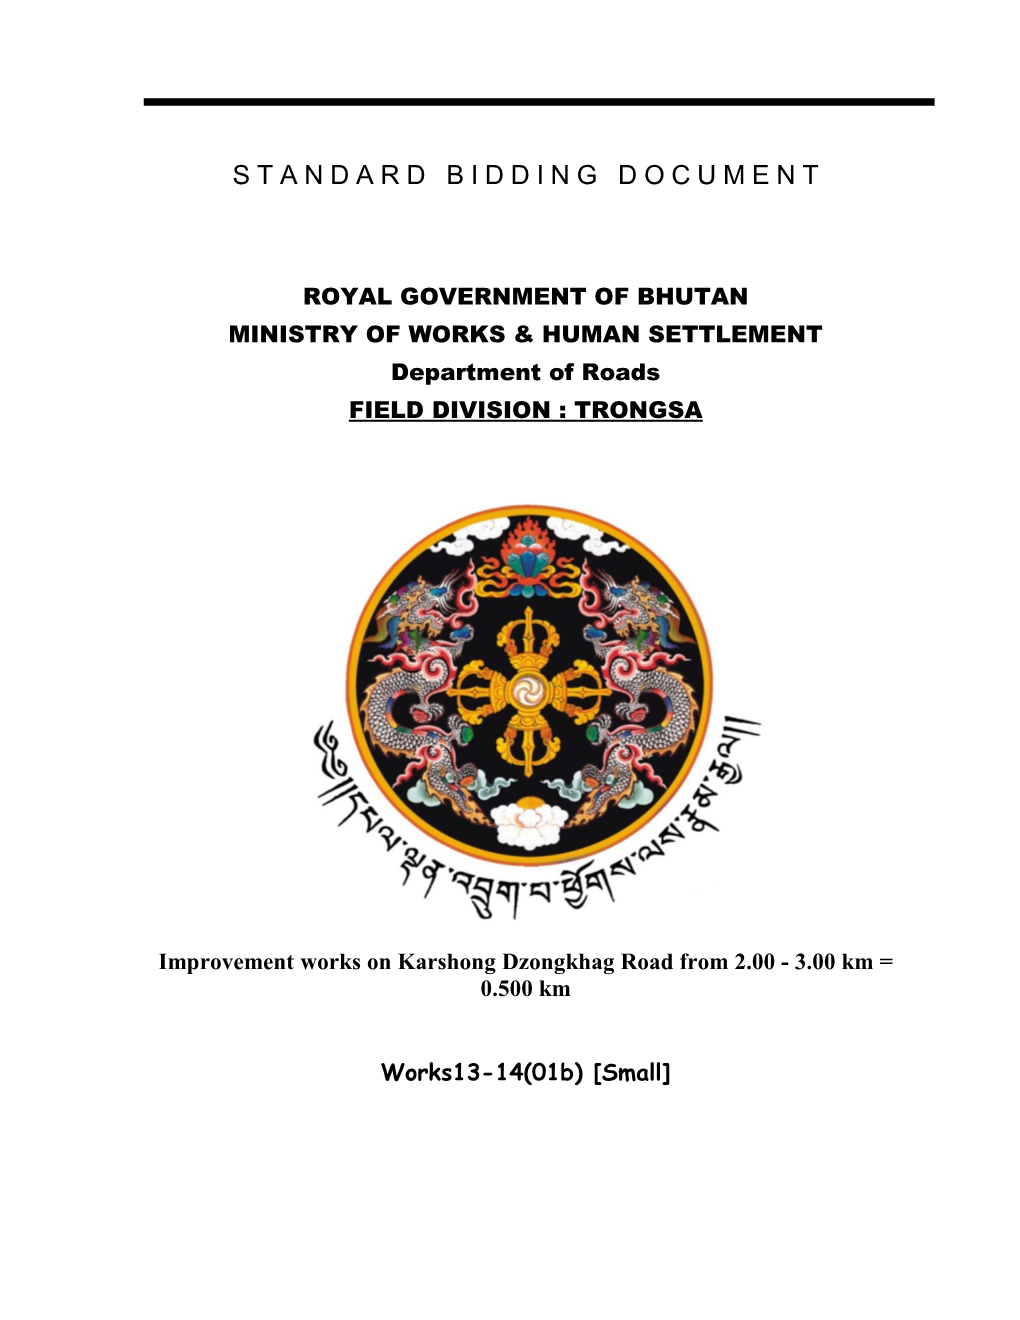 Standard Bidding Documents s3